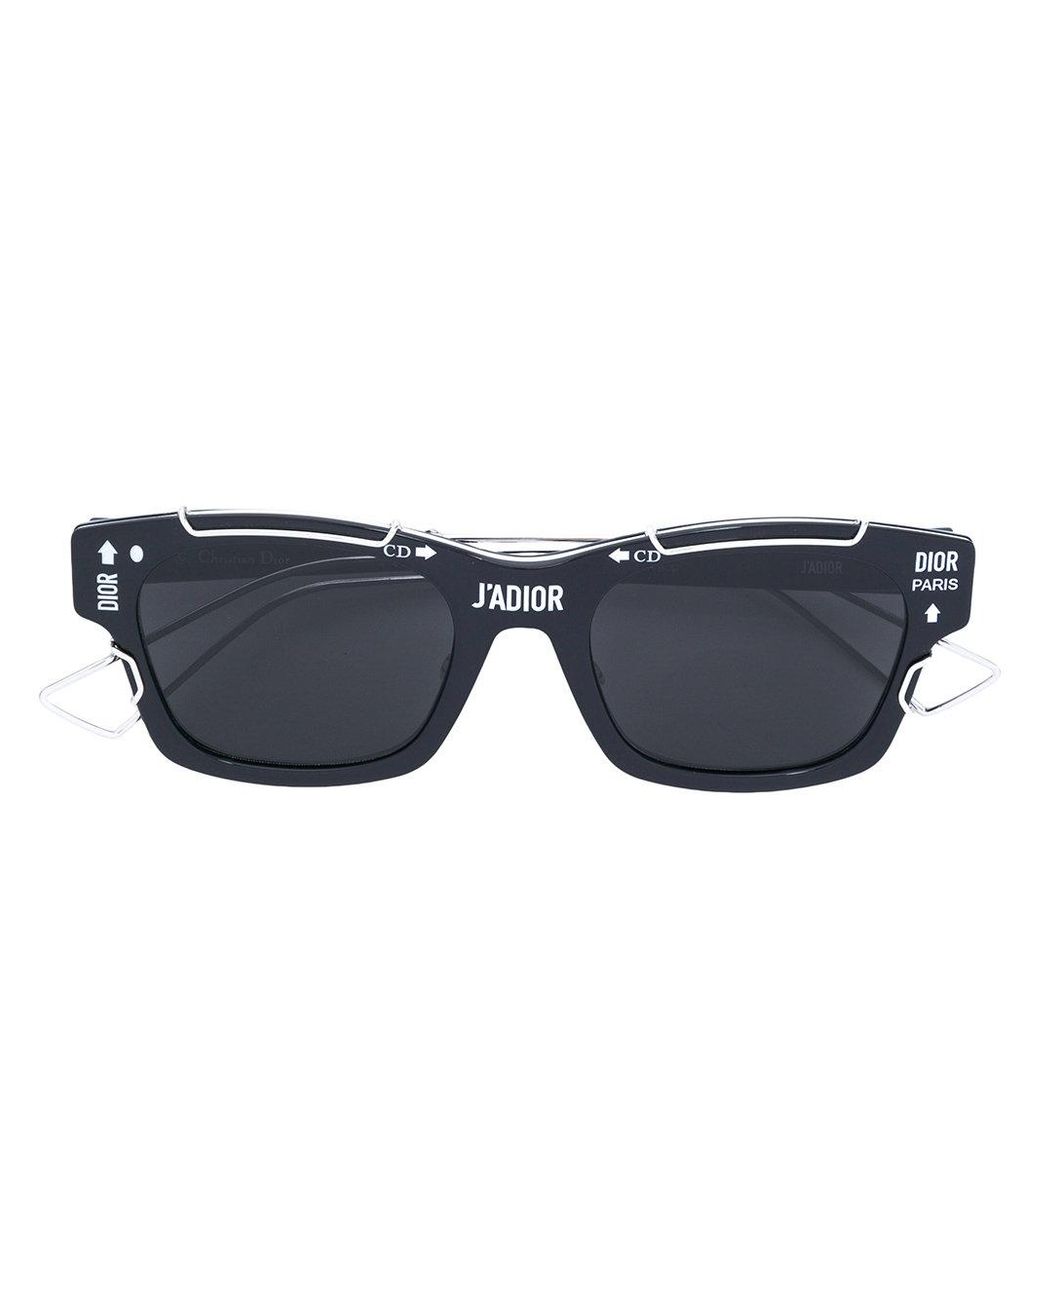 Dior  Sunglasses  JAdior  White  Silver  Dior Eyewear  Avvenice